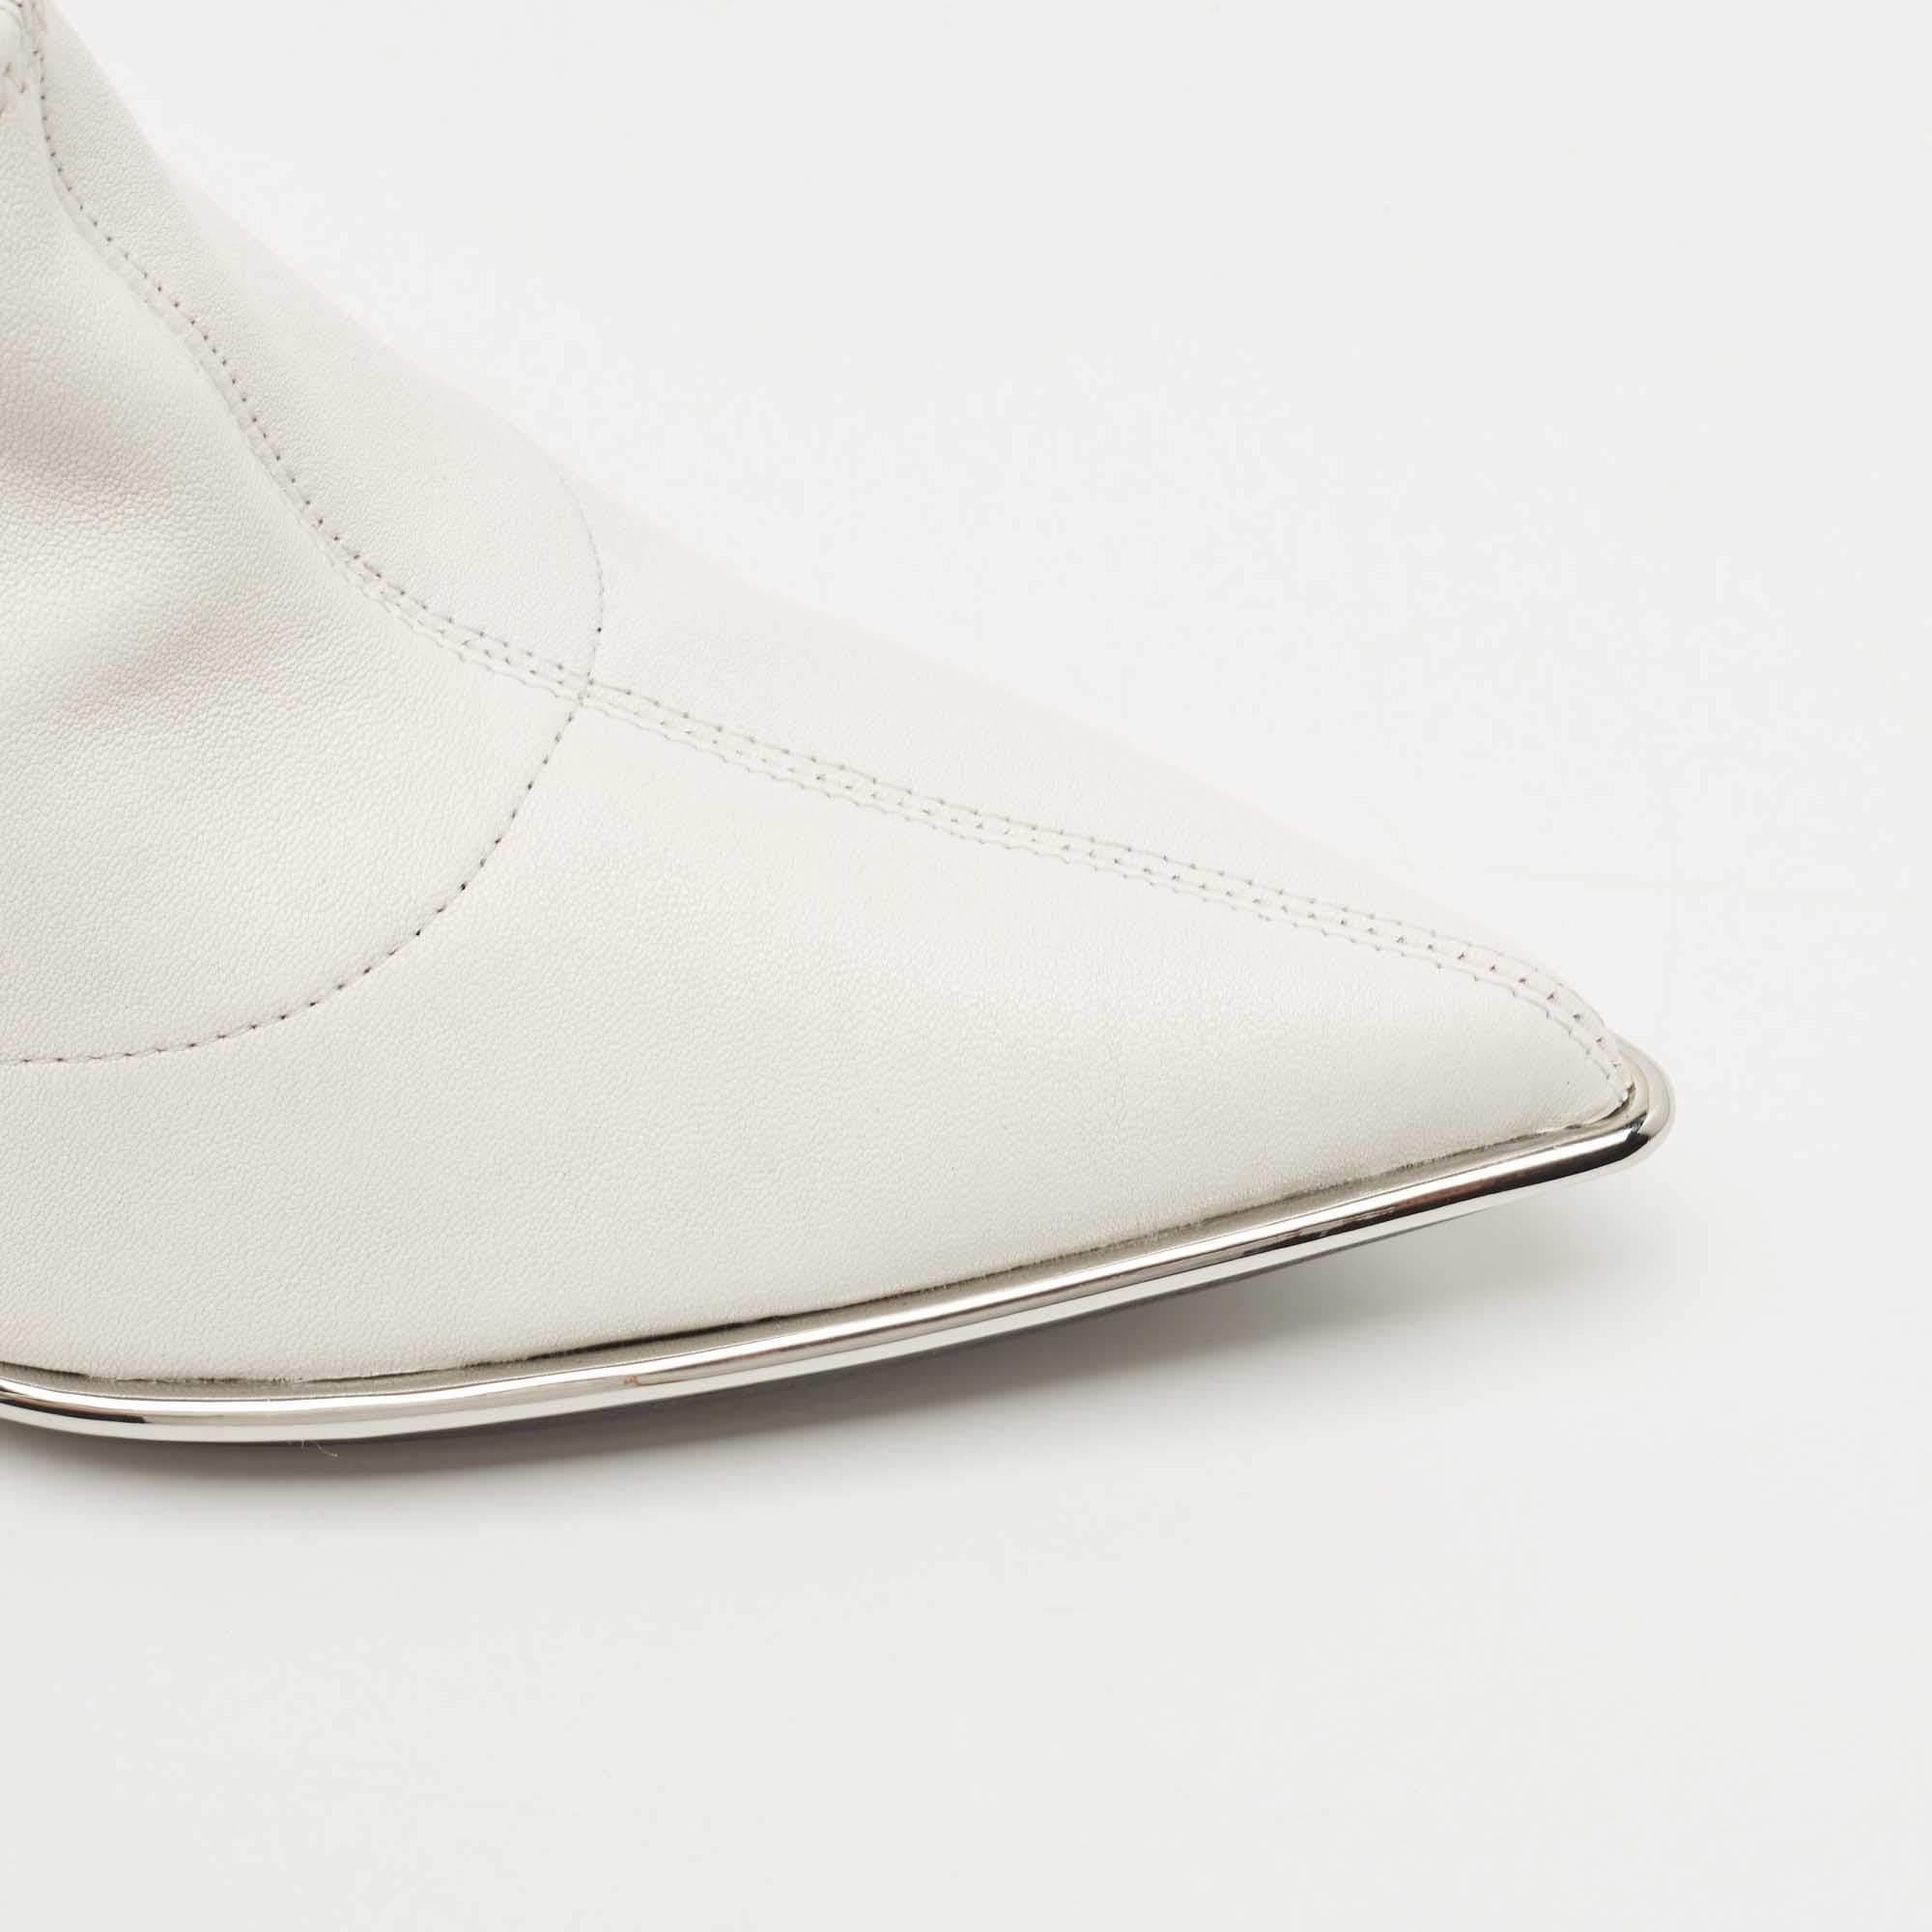 Alexander Wang White Leather Metal Trim Cara Stretch Napa Heels Boots Size 39.5 1